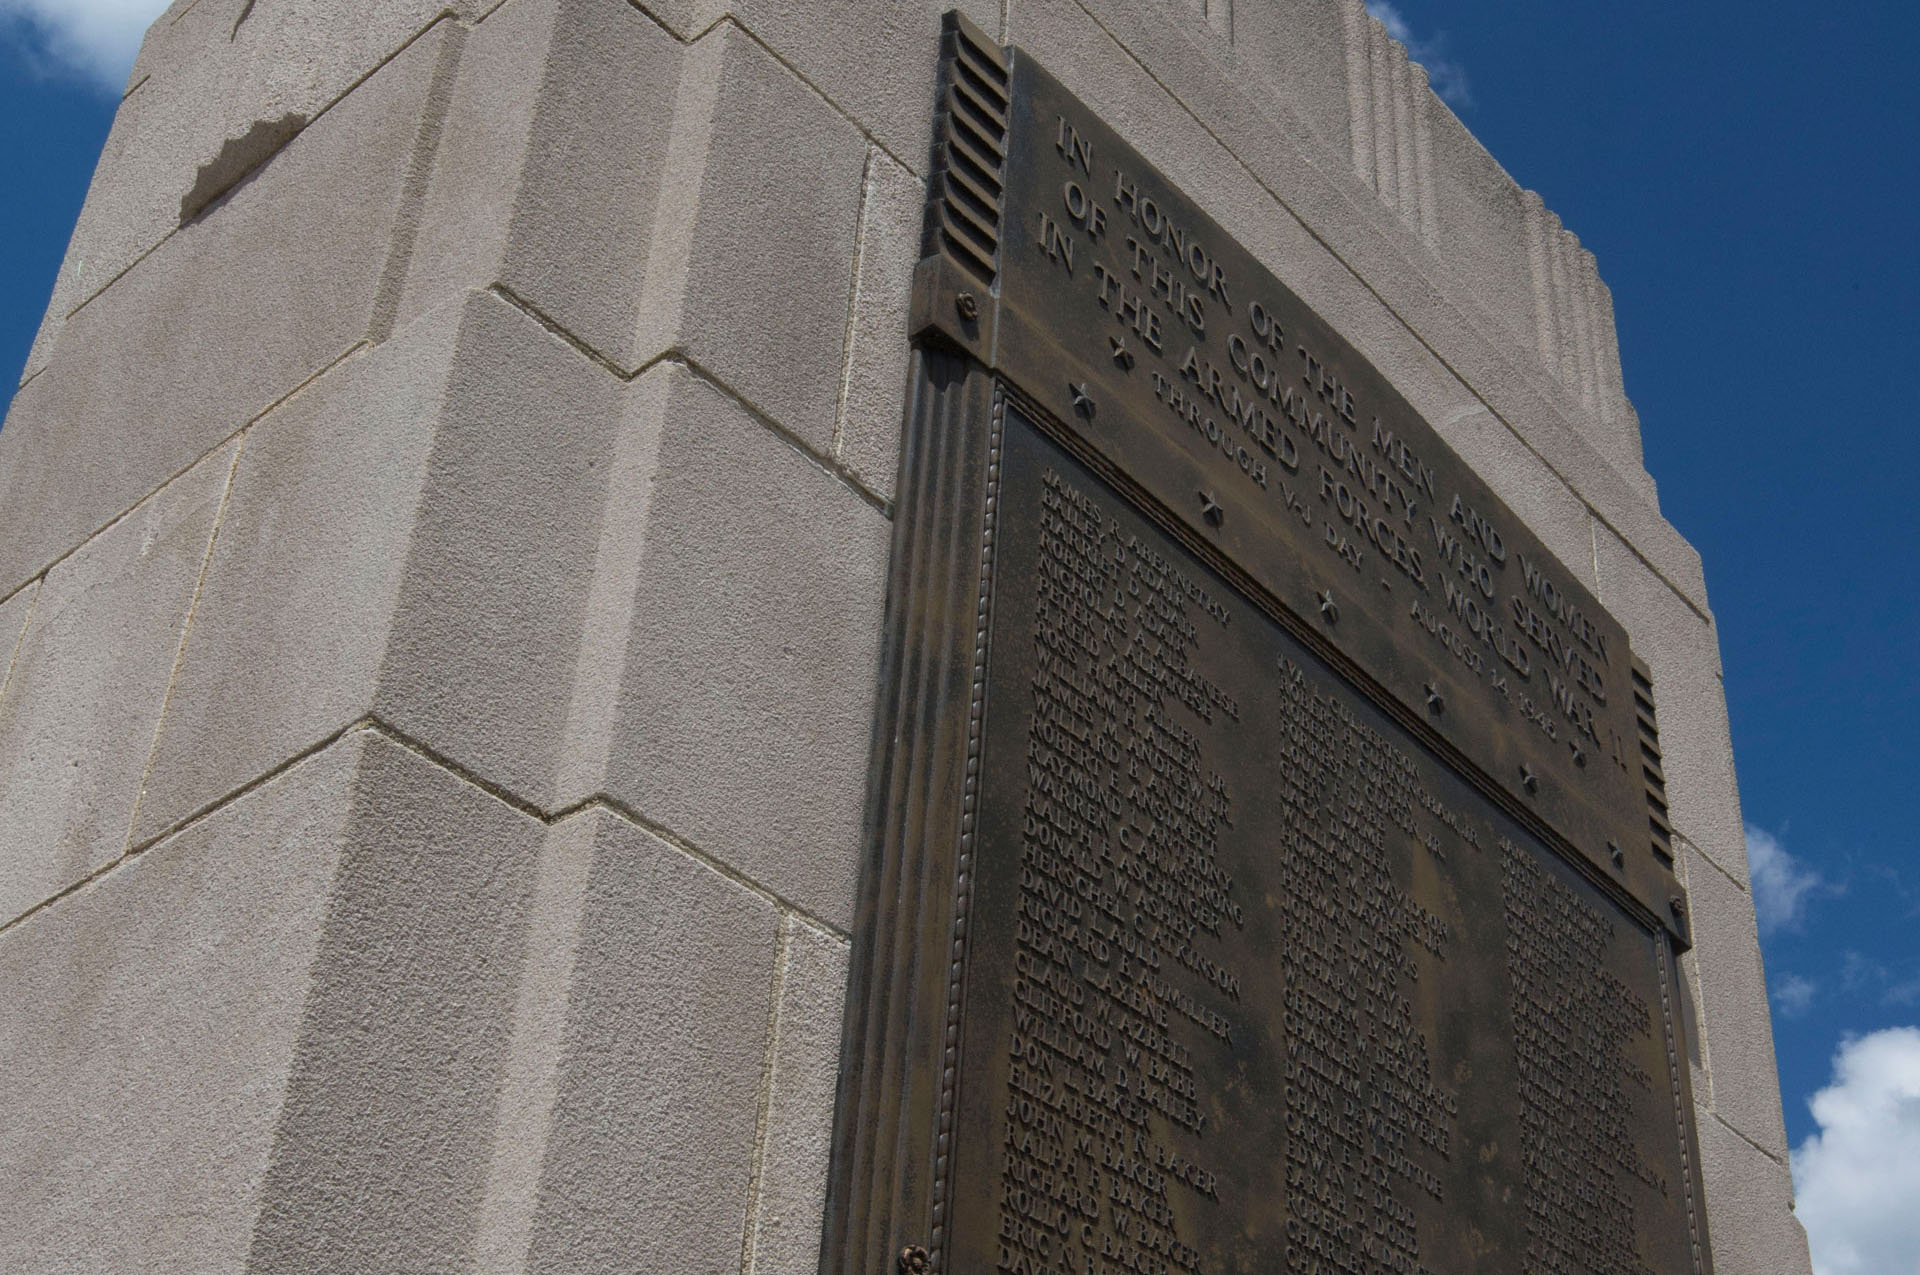 Mallway Park WWII Memorial